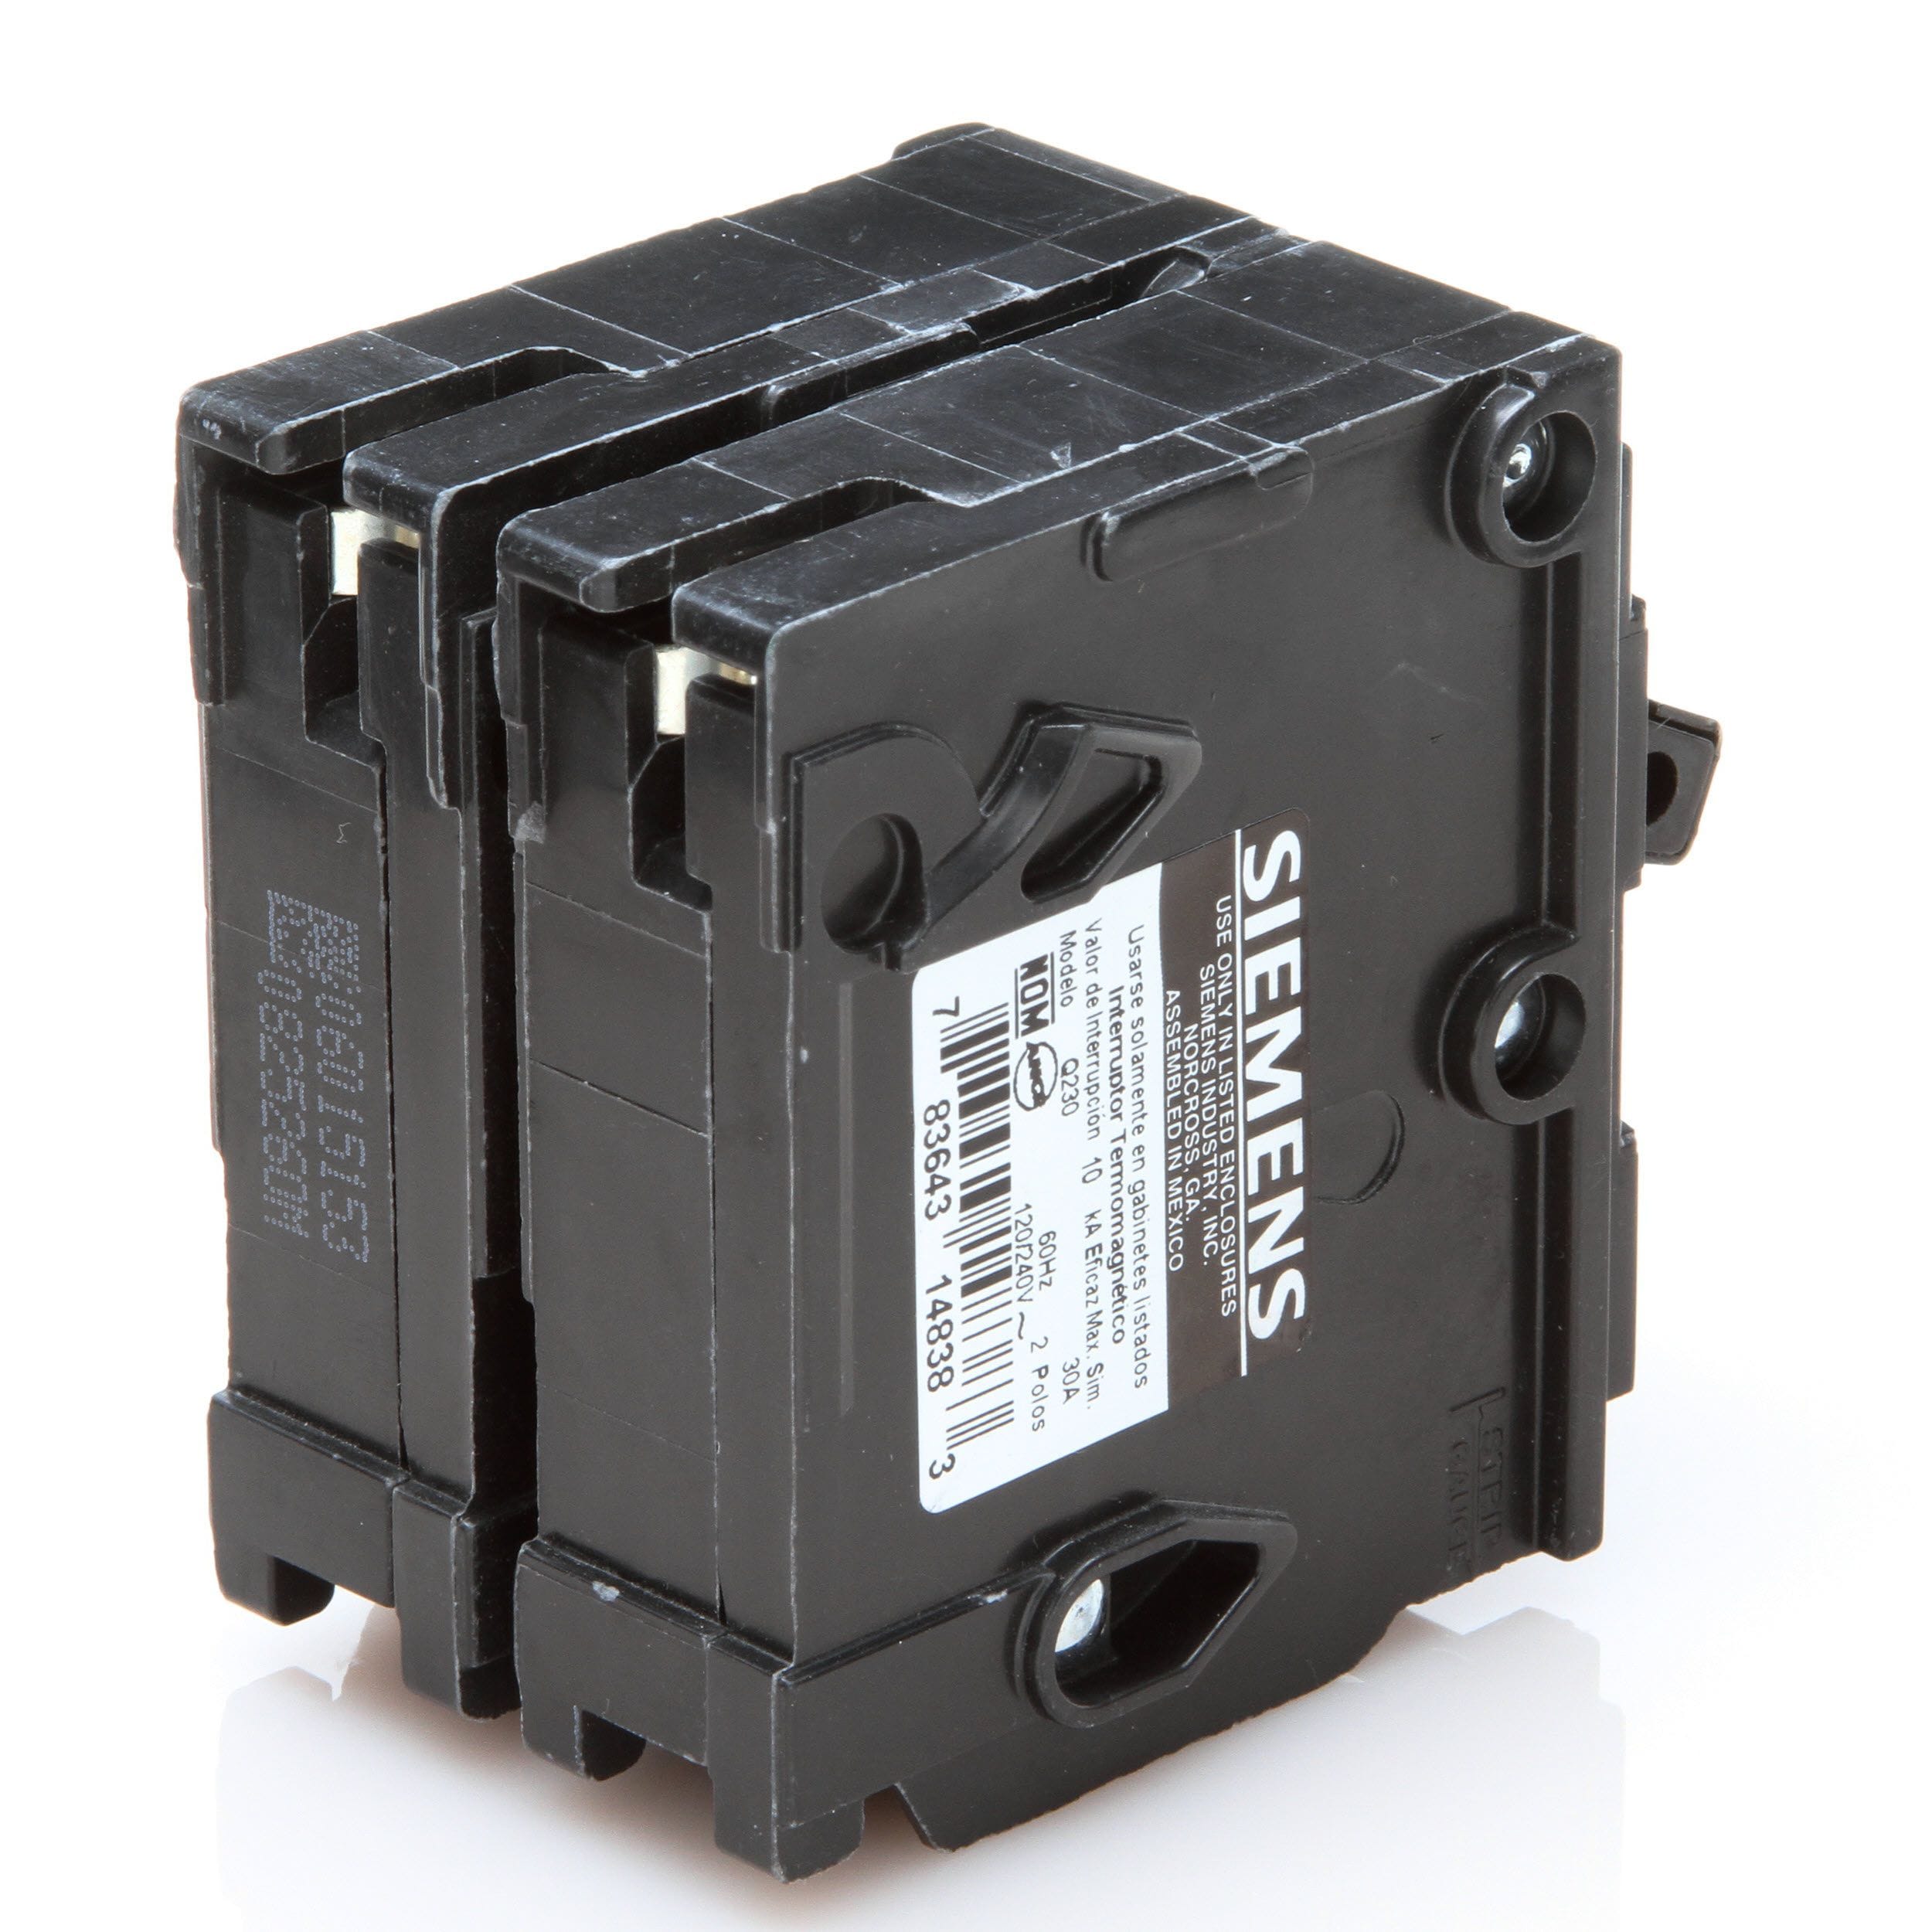 Siemens Q230 Circuit Breaker for sale online